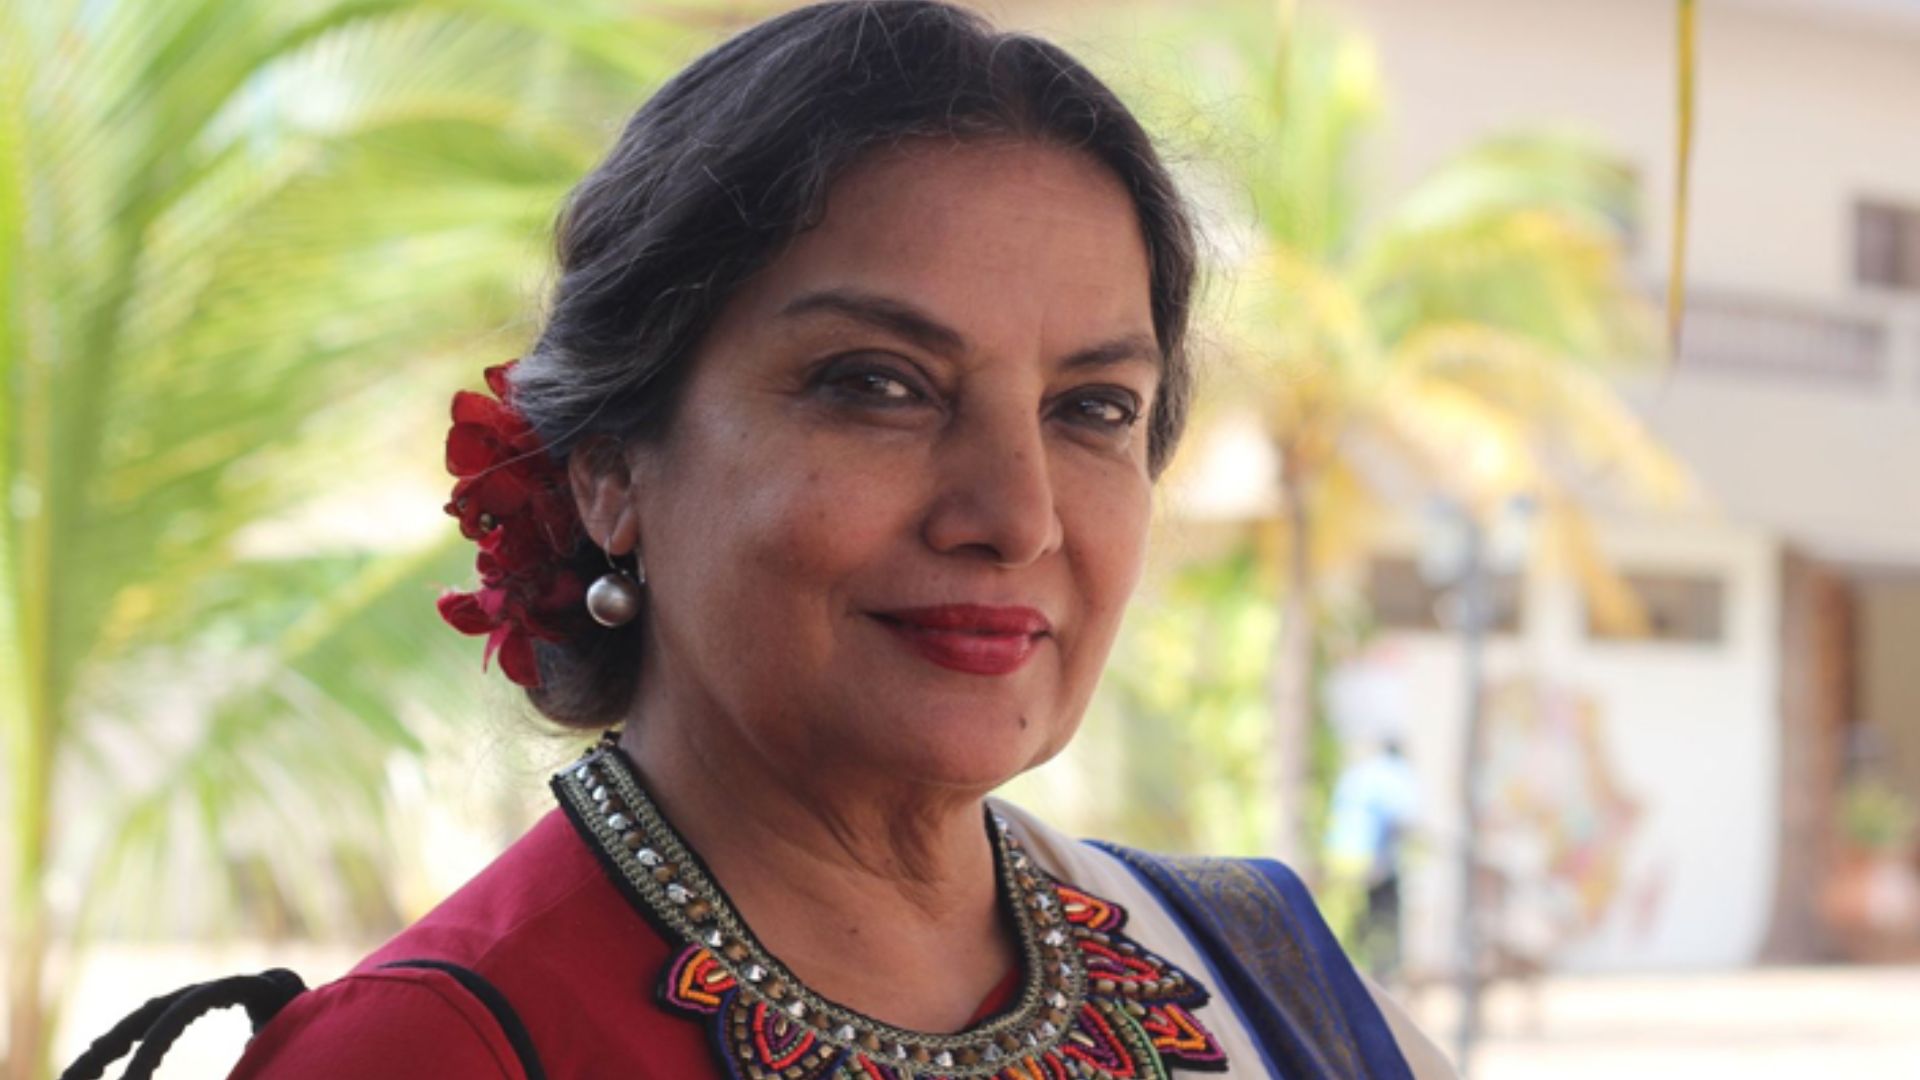 New York Indian Film Festival to celebrate Shabana Azmi's 50 years in cinema